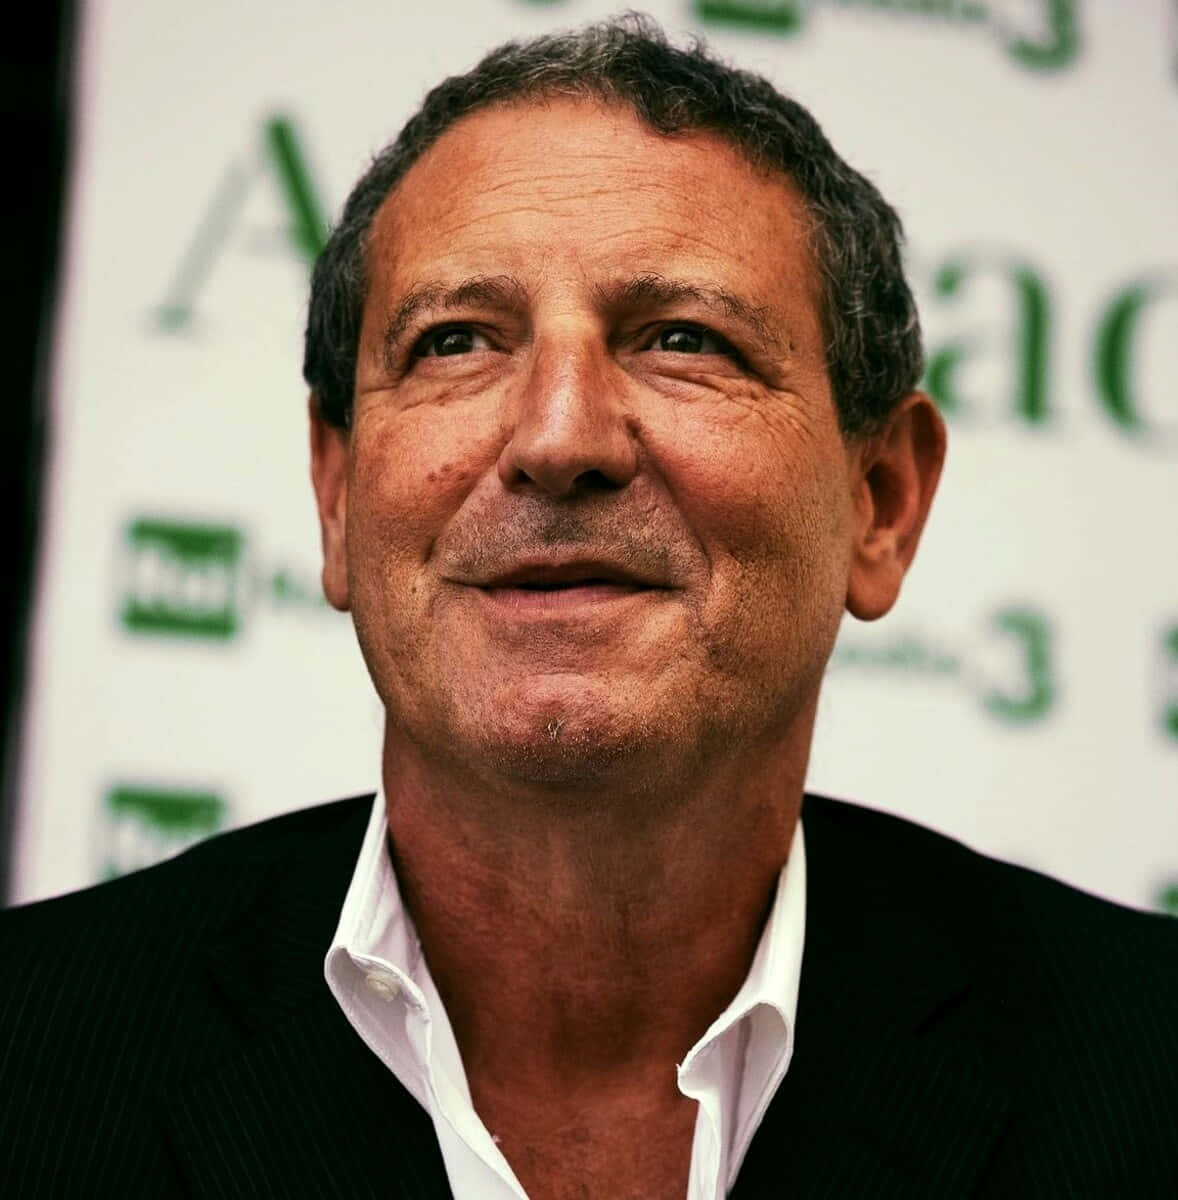 Football Team Manager Luigi Riva Smiling Portrait Picture